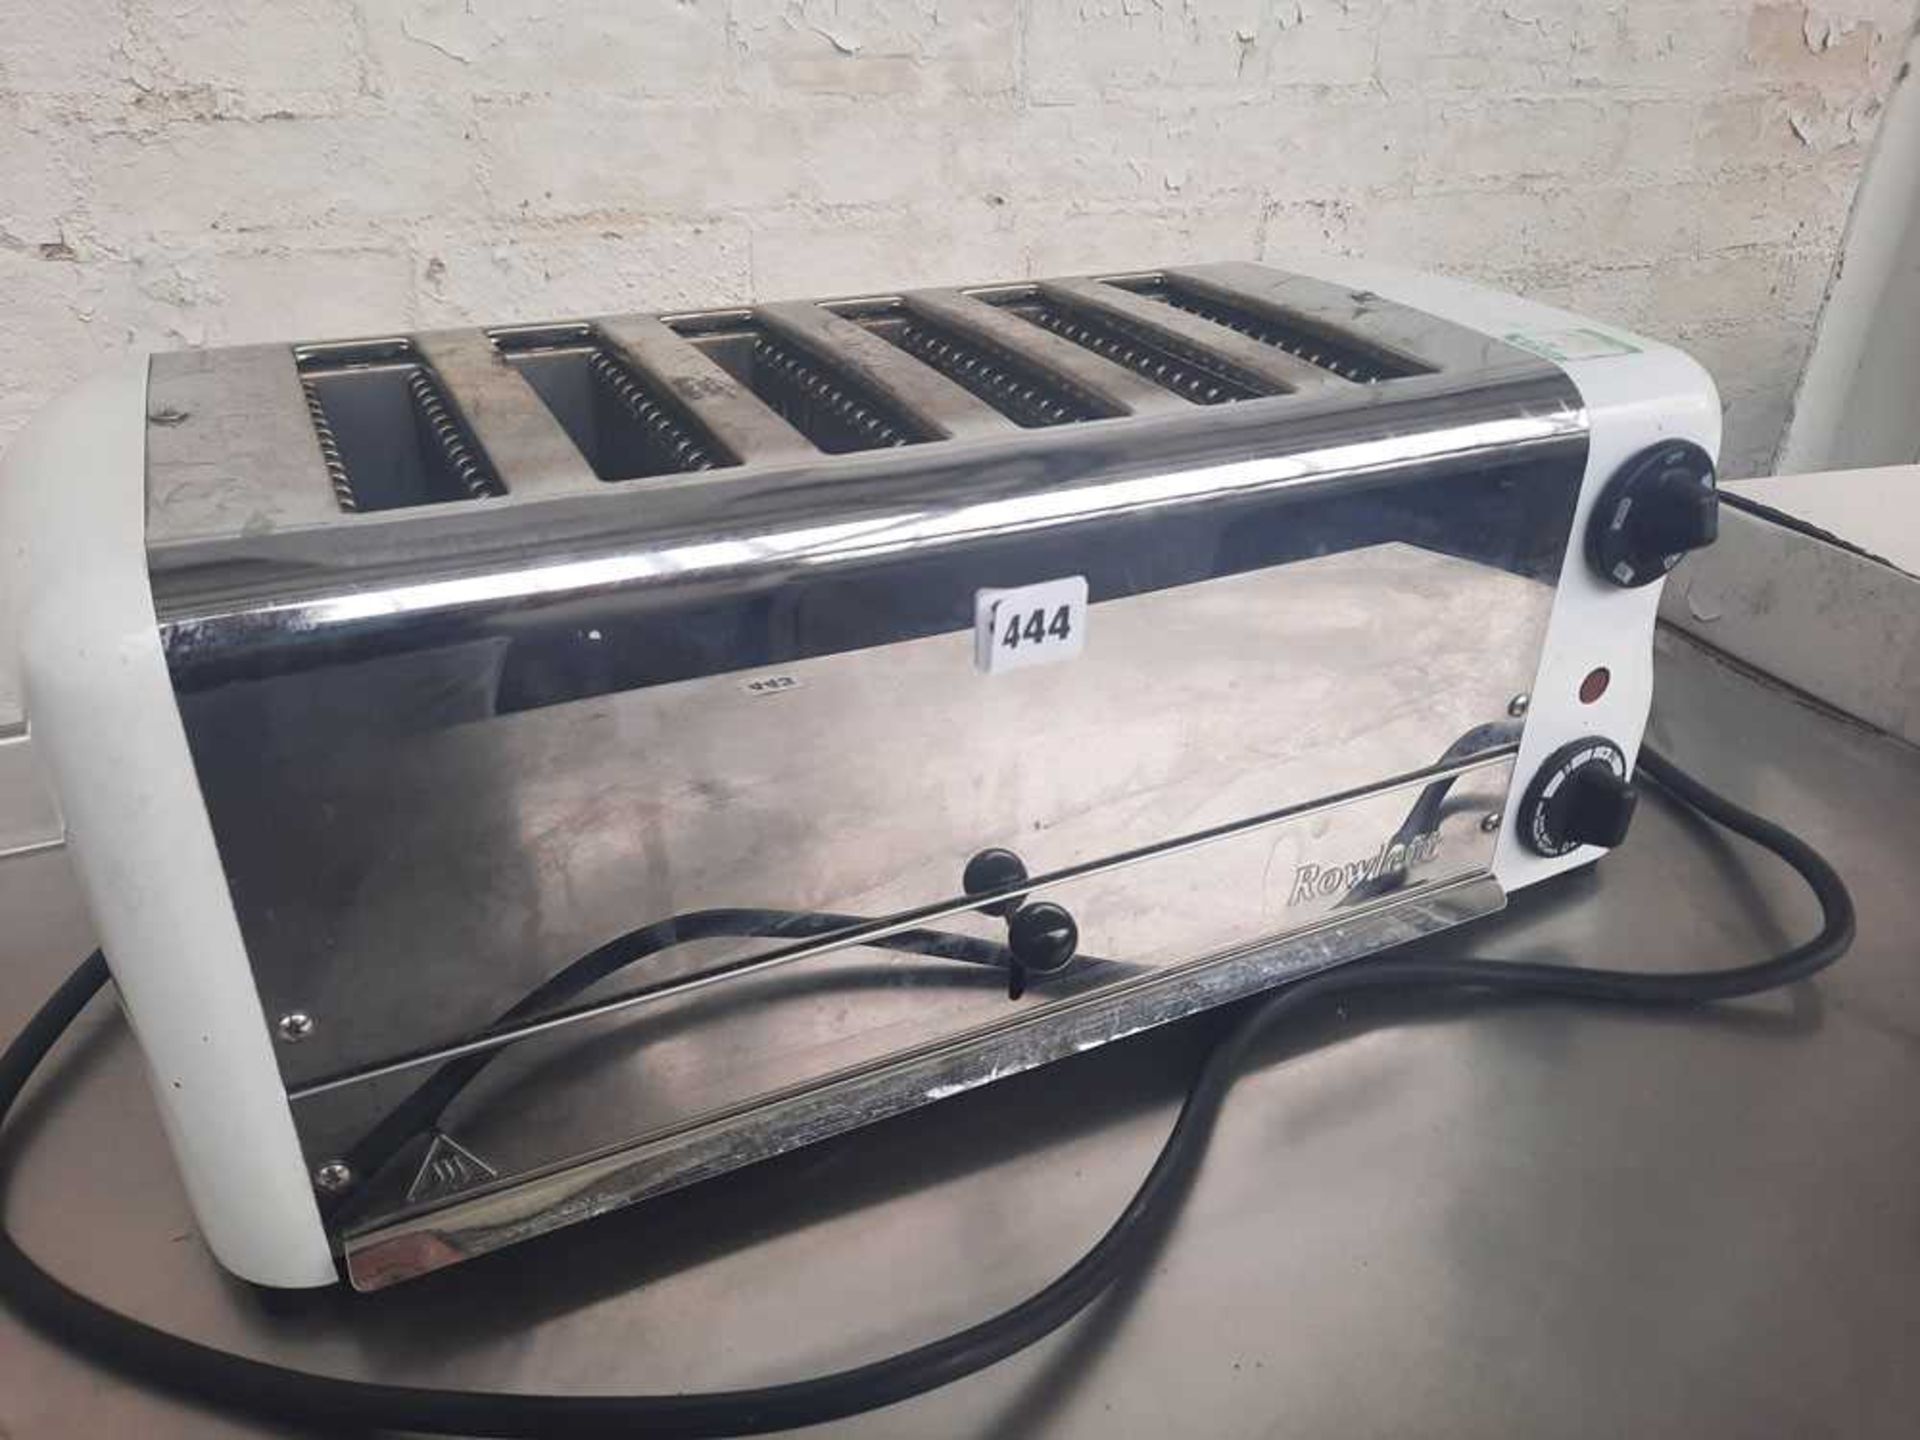 Rowlett 6 slice commercial toaster - Image 2 of 2